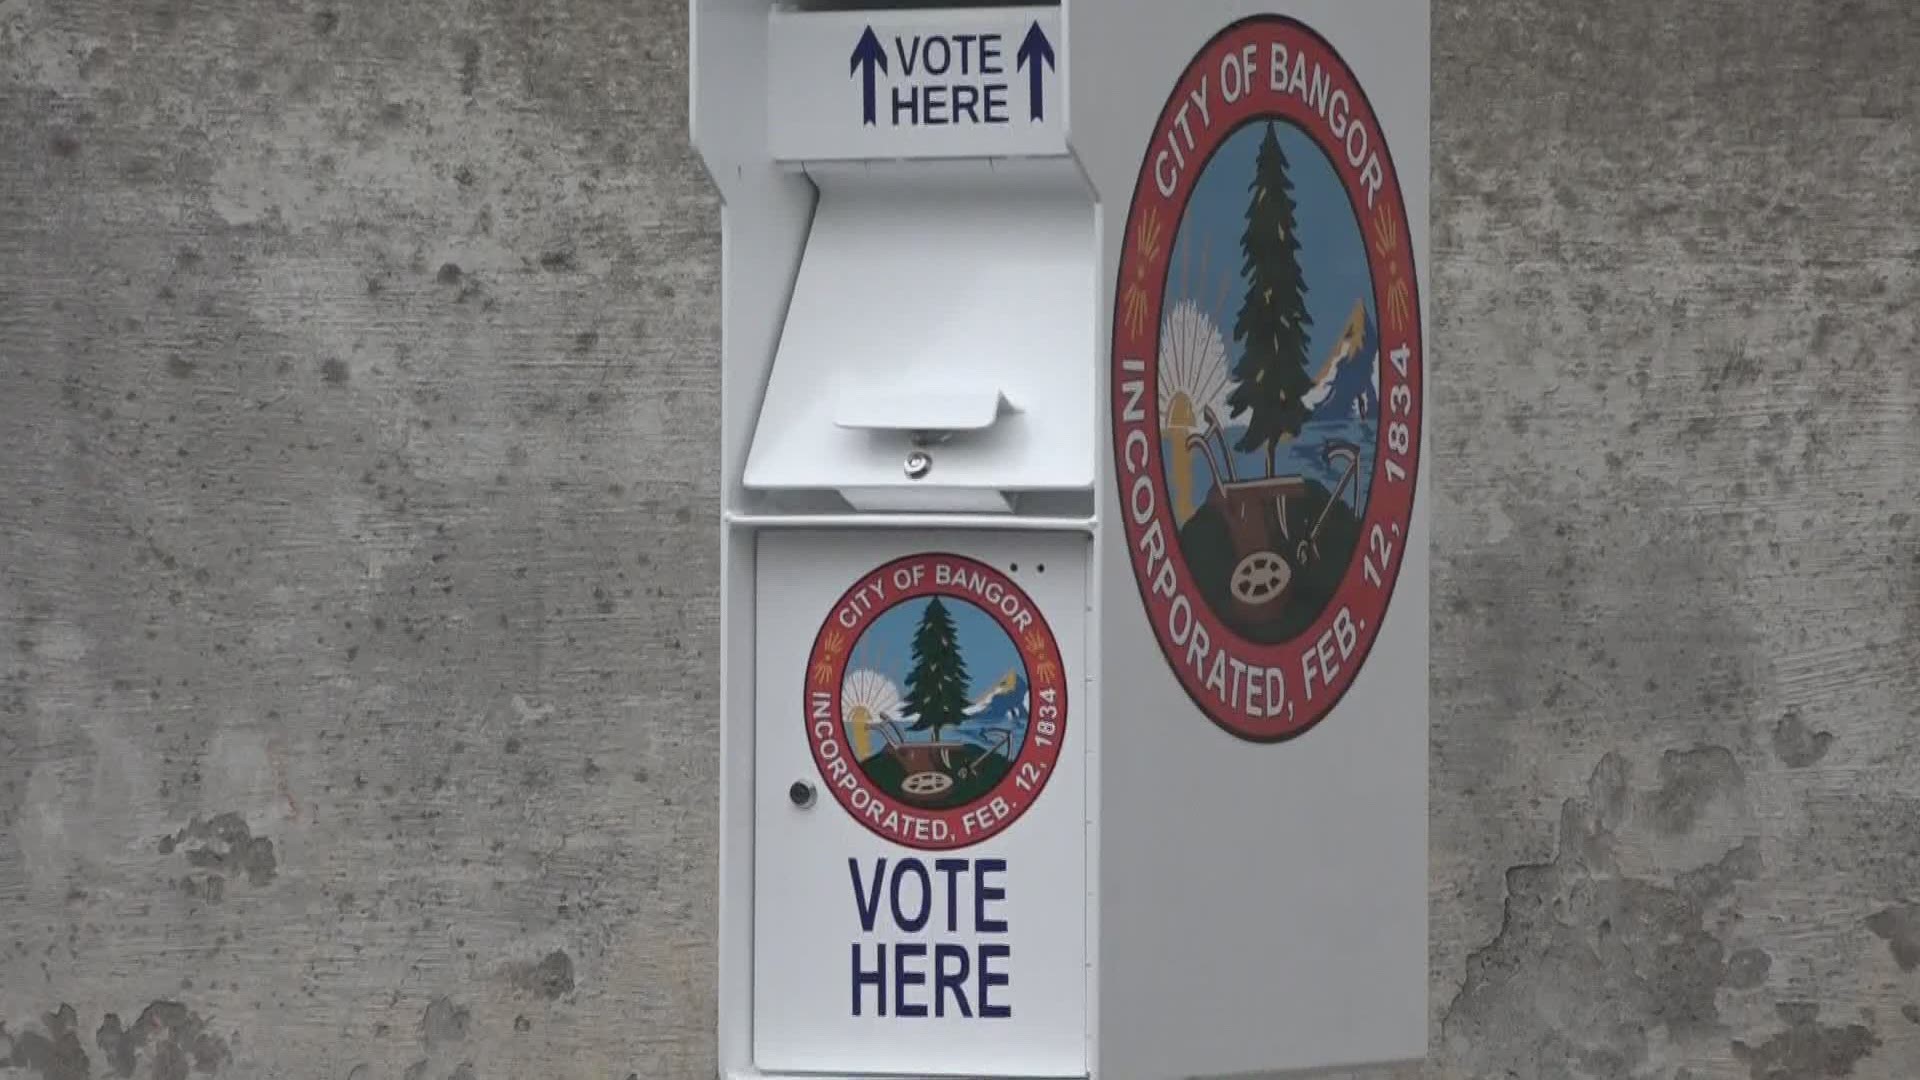 Bangor installs ballot drop box amid coronavirus, COVID-19